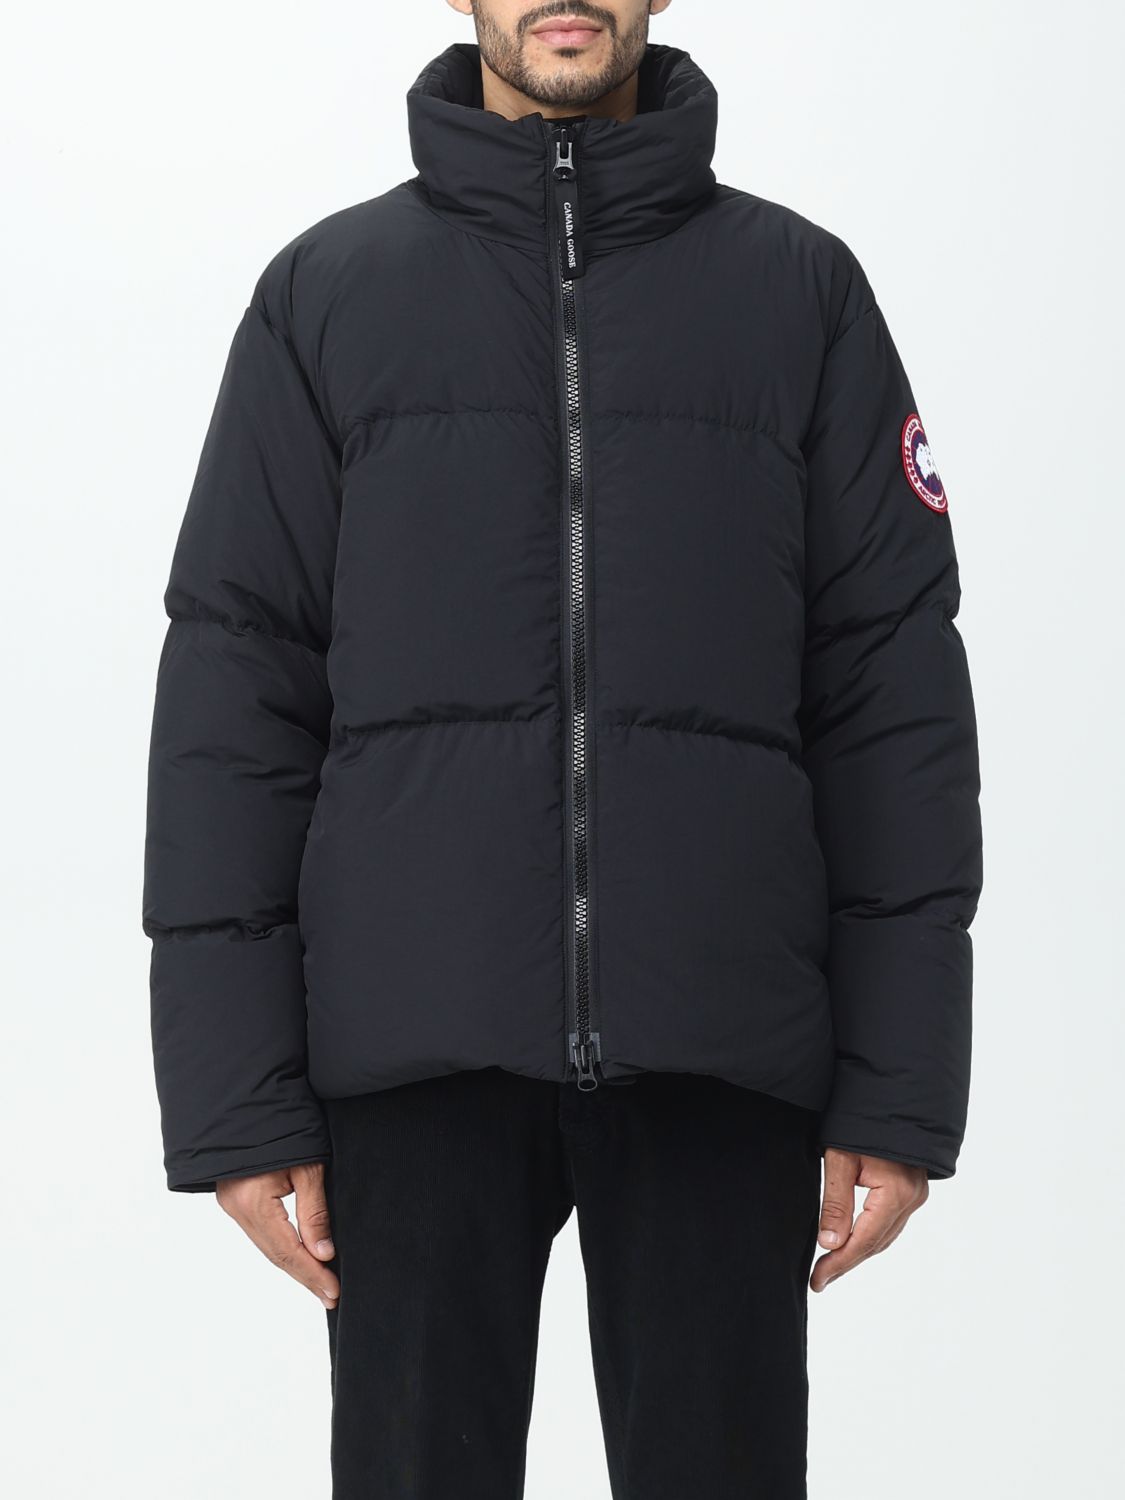 CANADA GOOSE: jacket for man - Black | Canada Goose jacket 2802M online ...